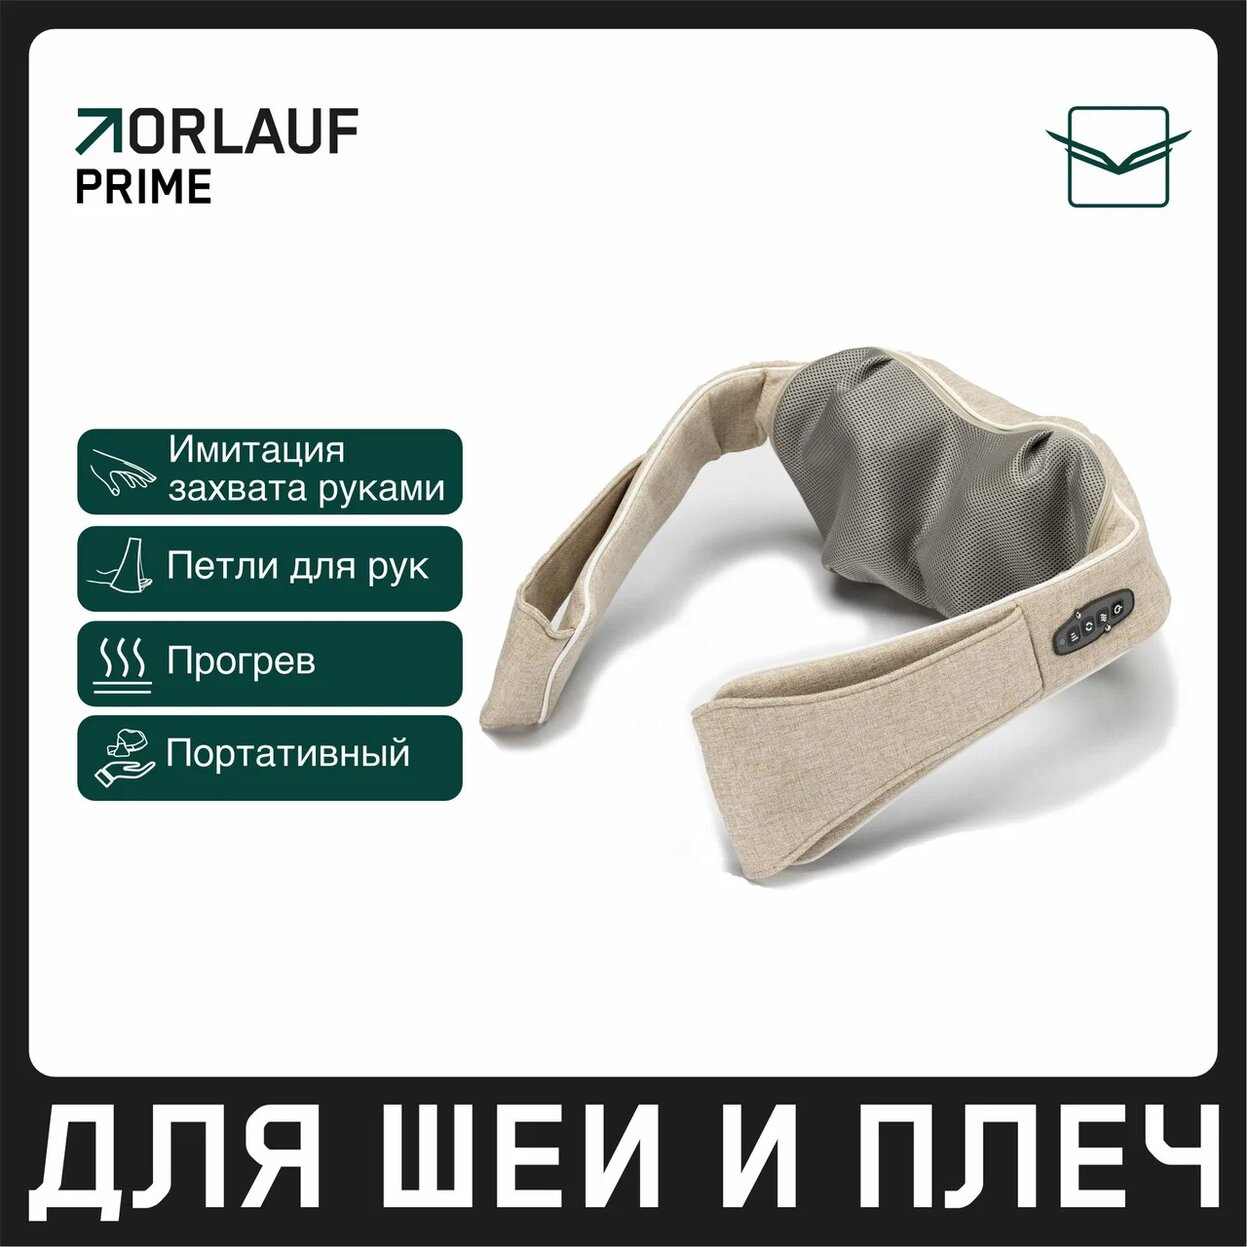 Orlauf Prime из каталога устройств для массажа в Омске по цене 11900 ₽